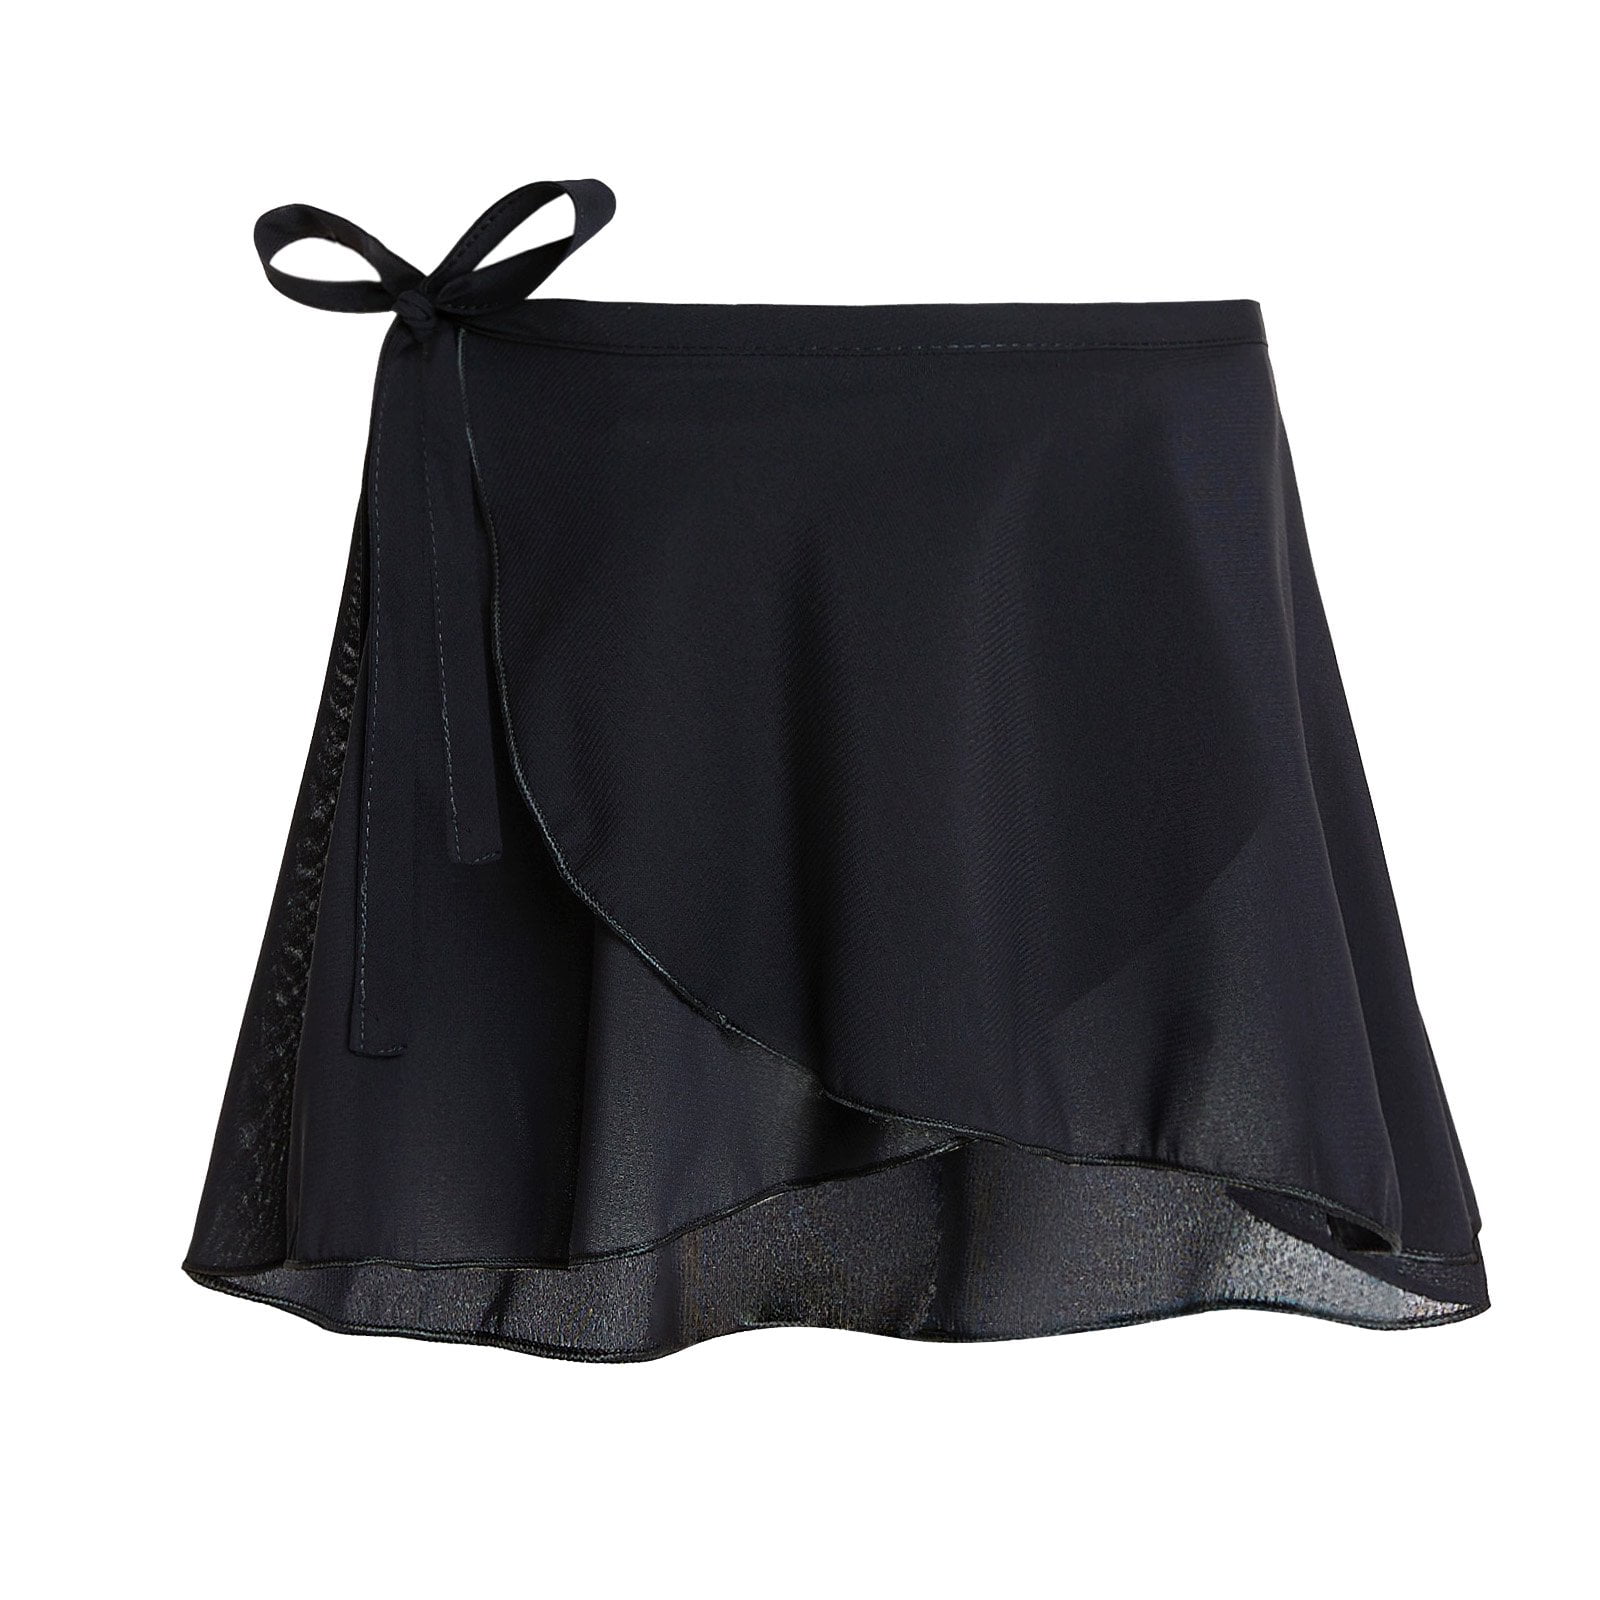 Black Girls Ballet Skirts Size 6-7 Years Old Chiffon Dancewear Match ...